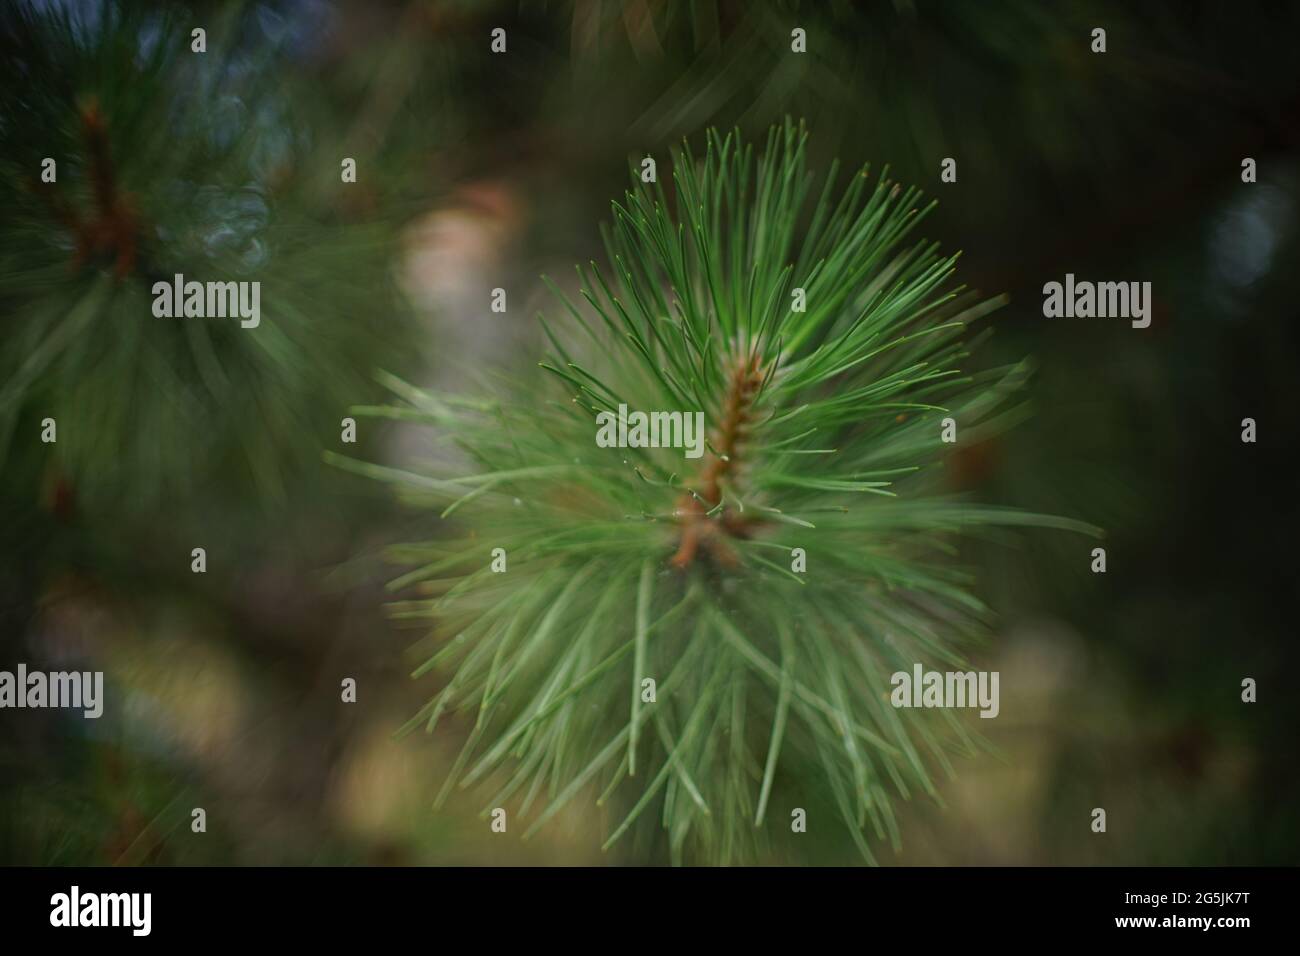 Lush pine tree branch closeup in the garden. Art card Stock Photo